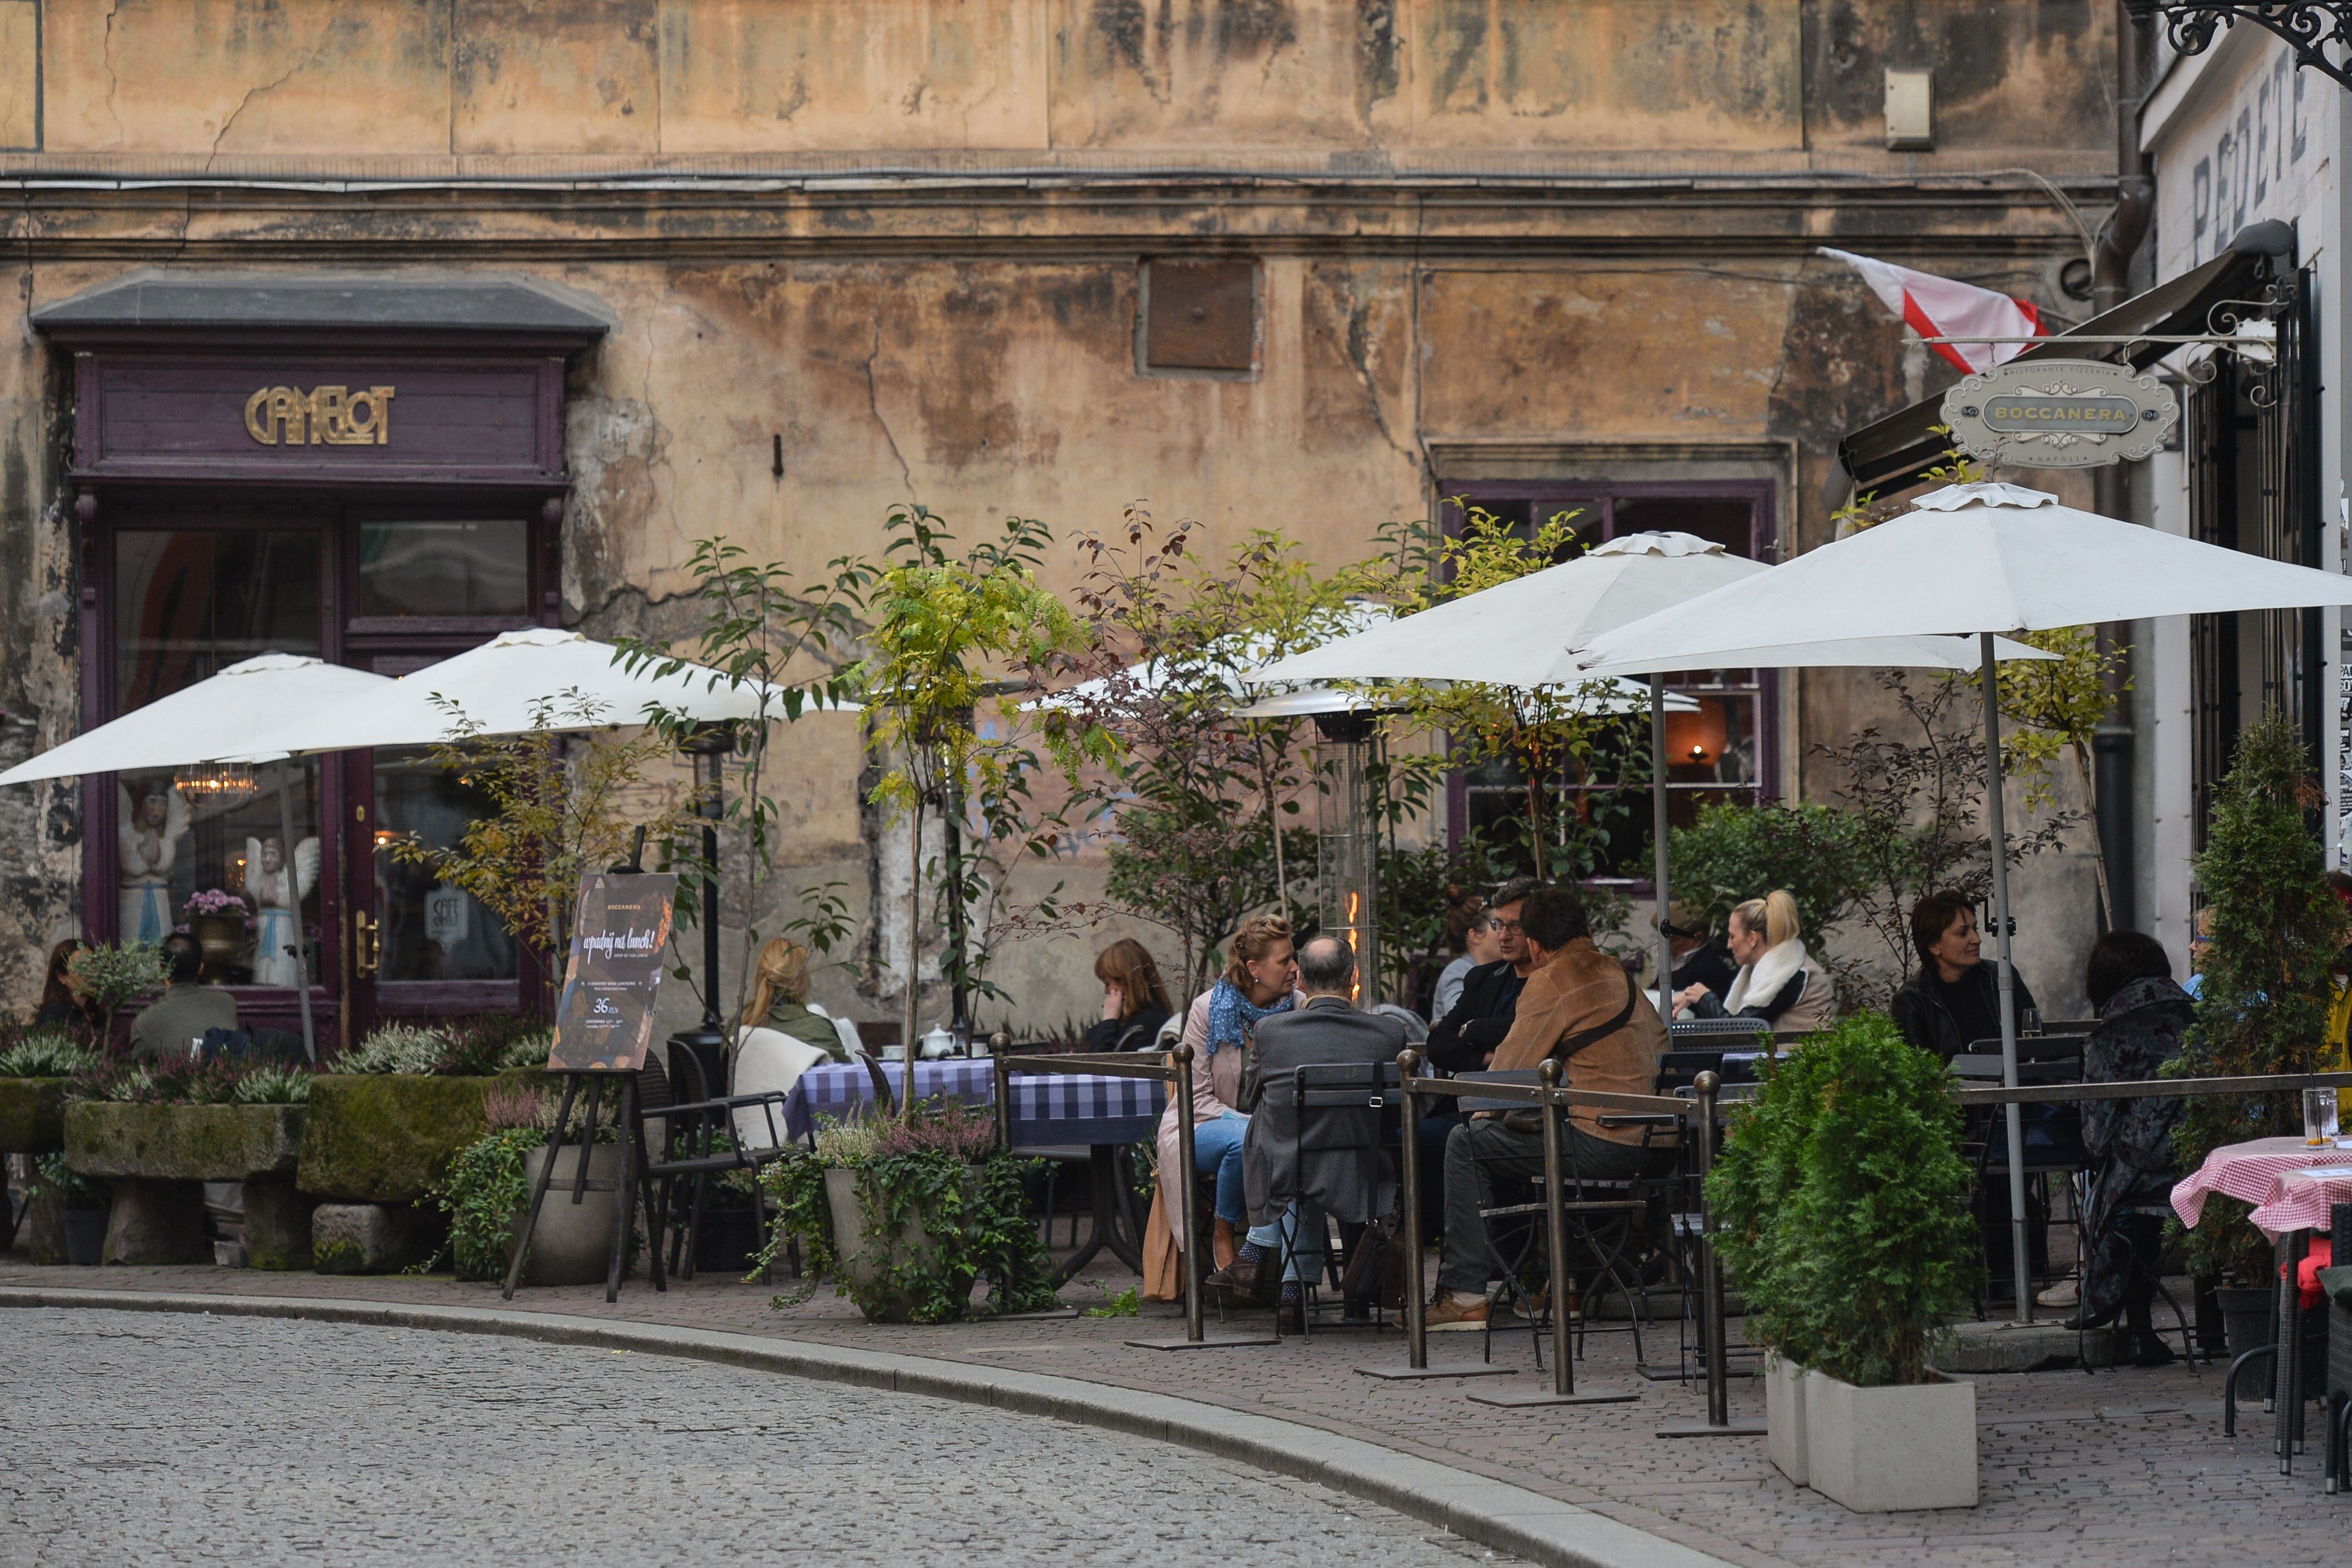 Terraza del café Camelot en Stare Miasto, el casco antiguo de Cracovia (Polonia).   